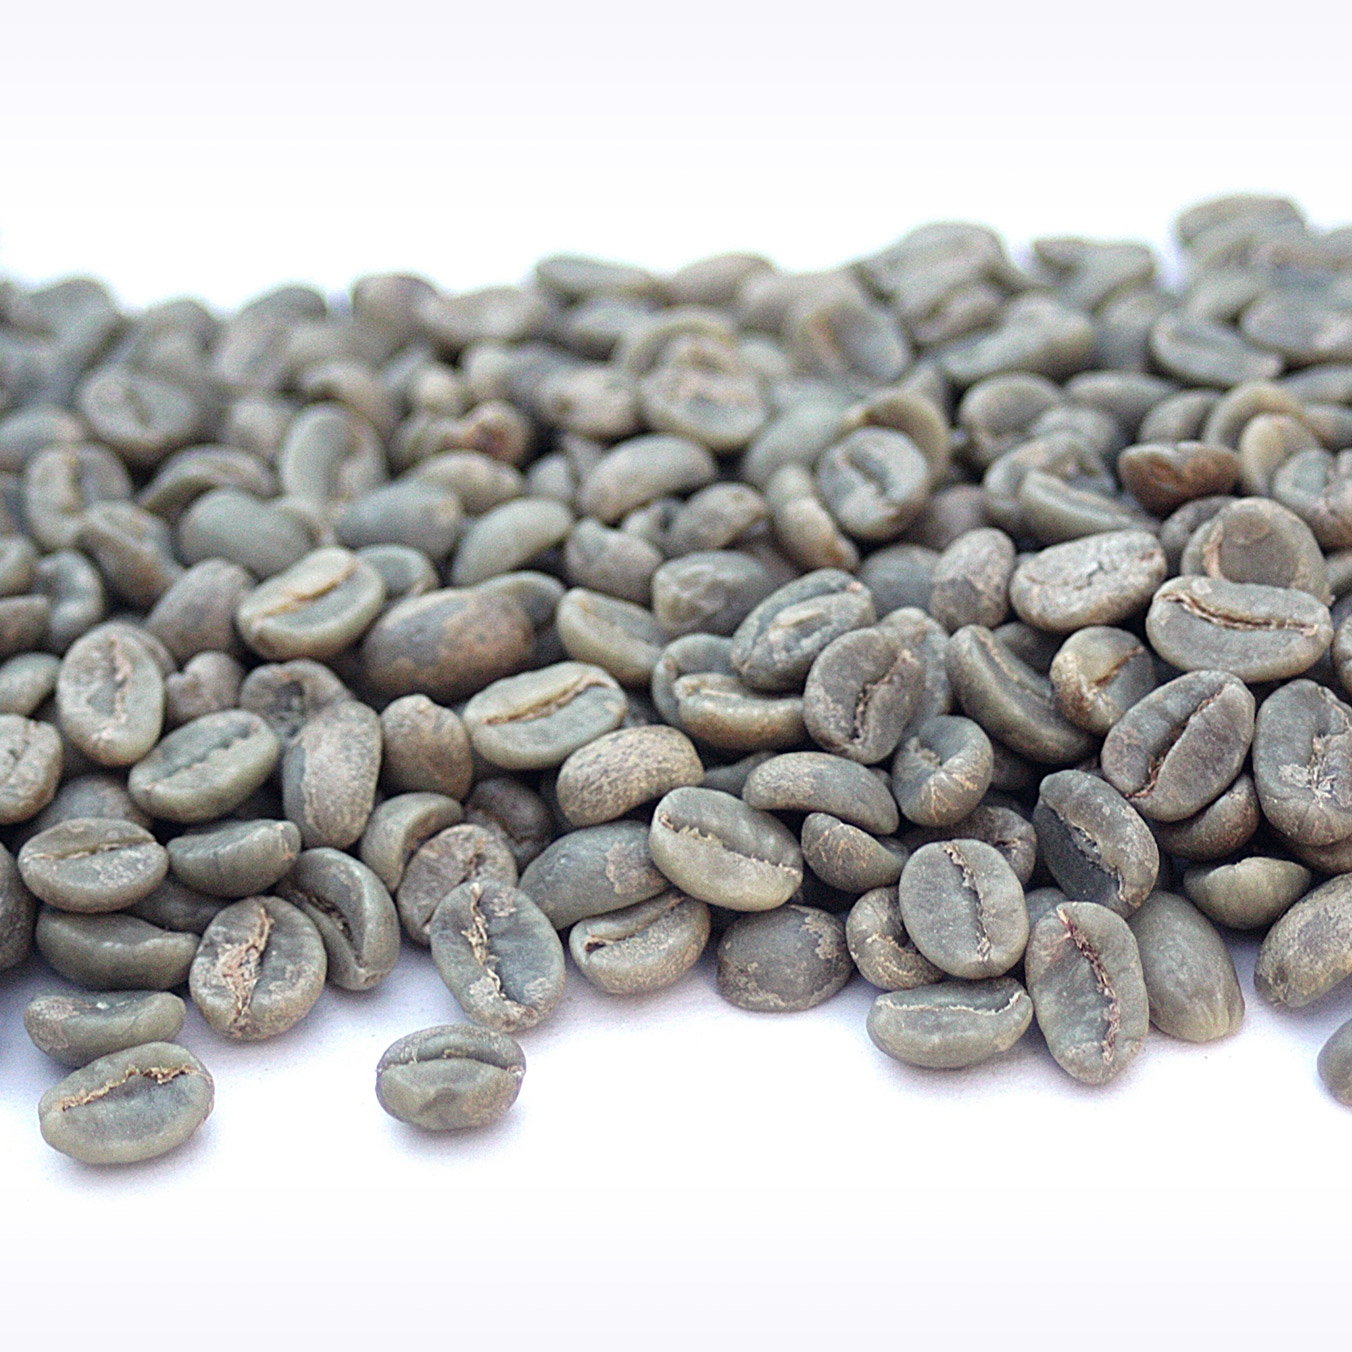 boom Ugandan Mount Elgon Arabicas 6Kg £36 free P+P correct price coffee at last 